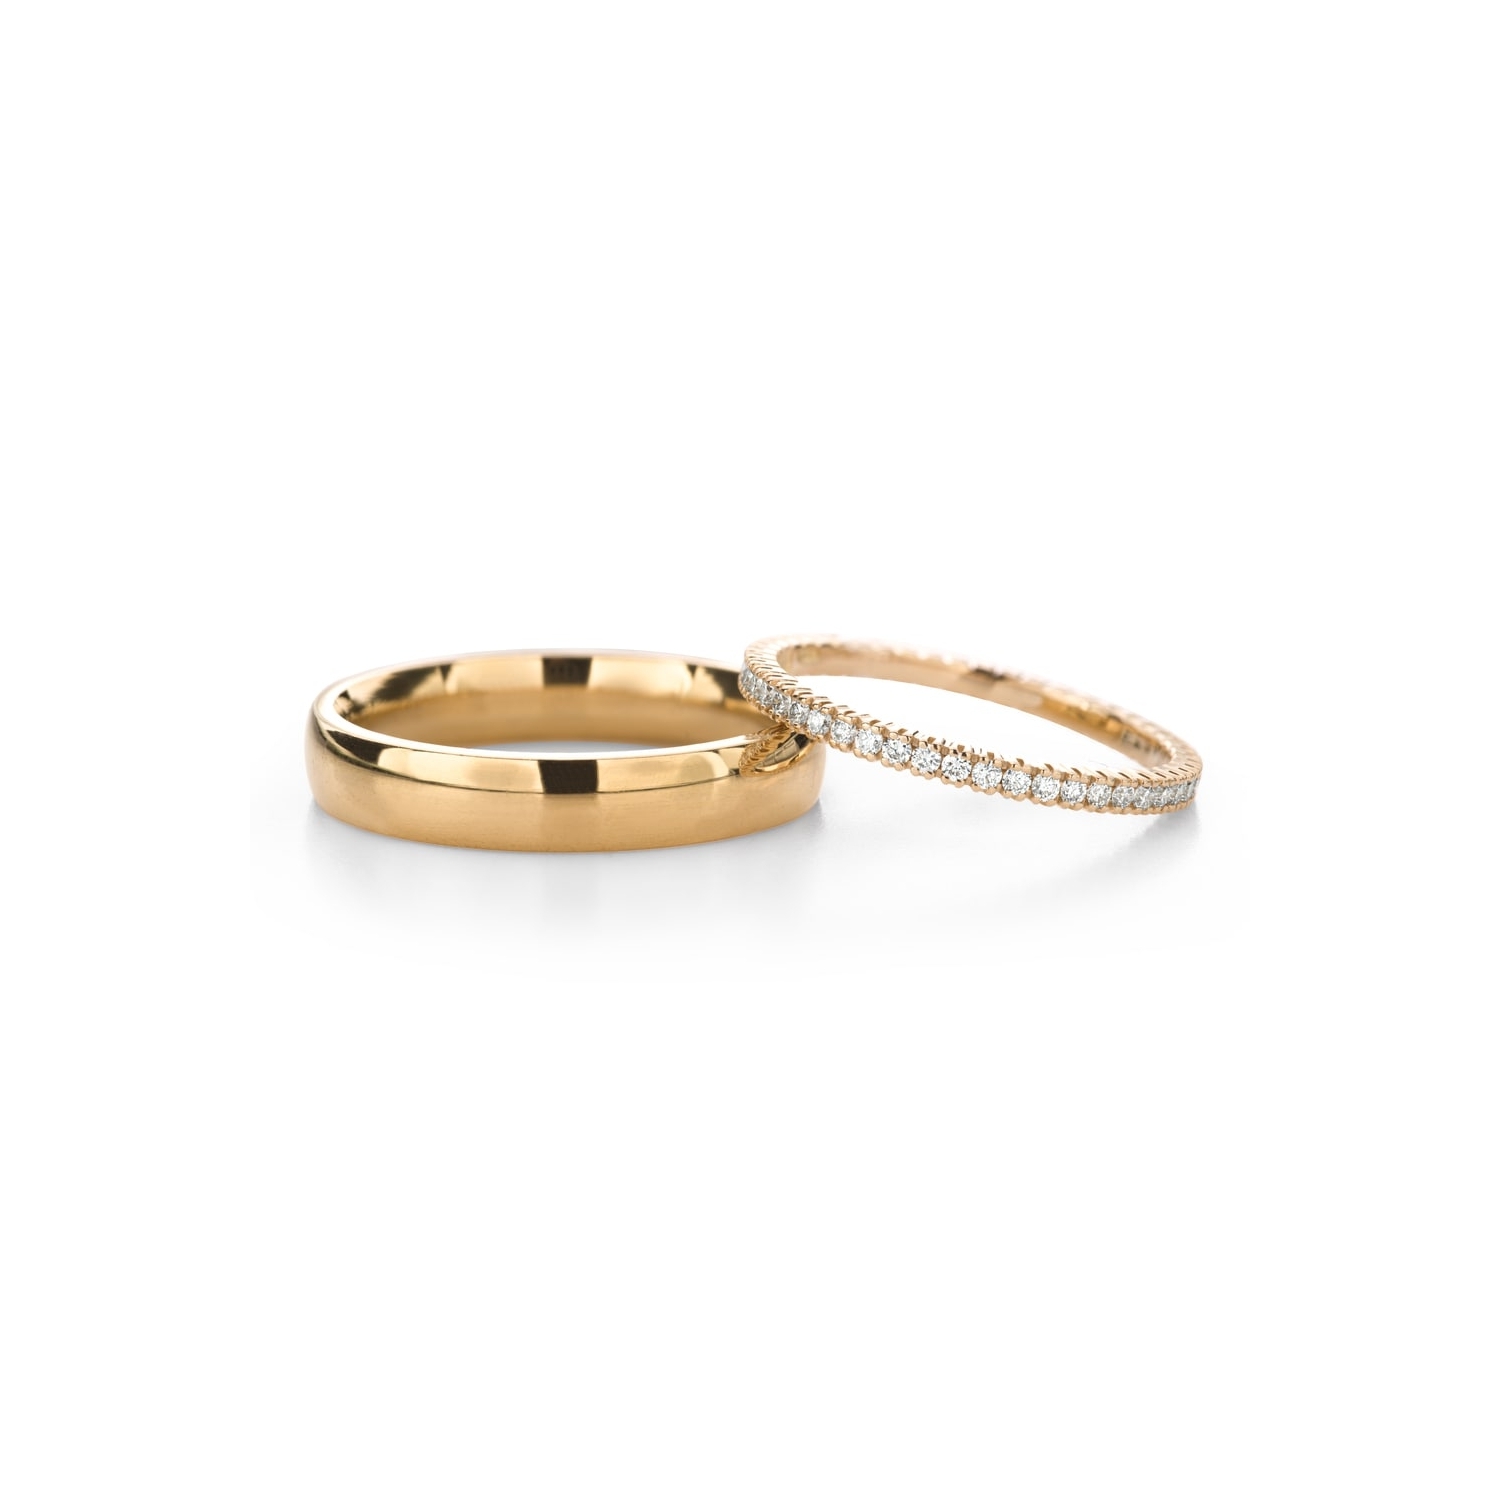 Golden wedding rings with diamonds "VKA 330"